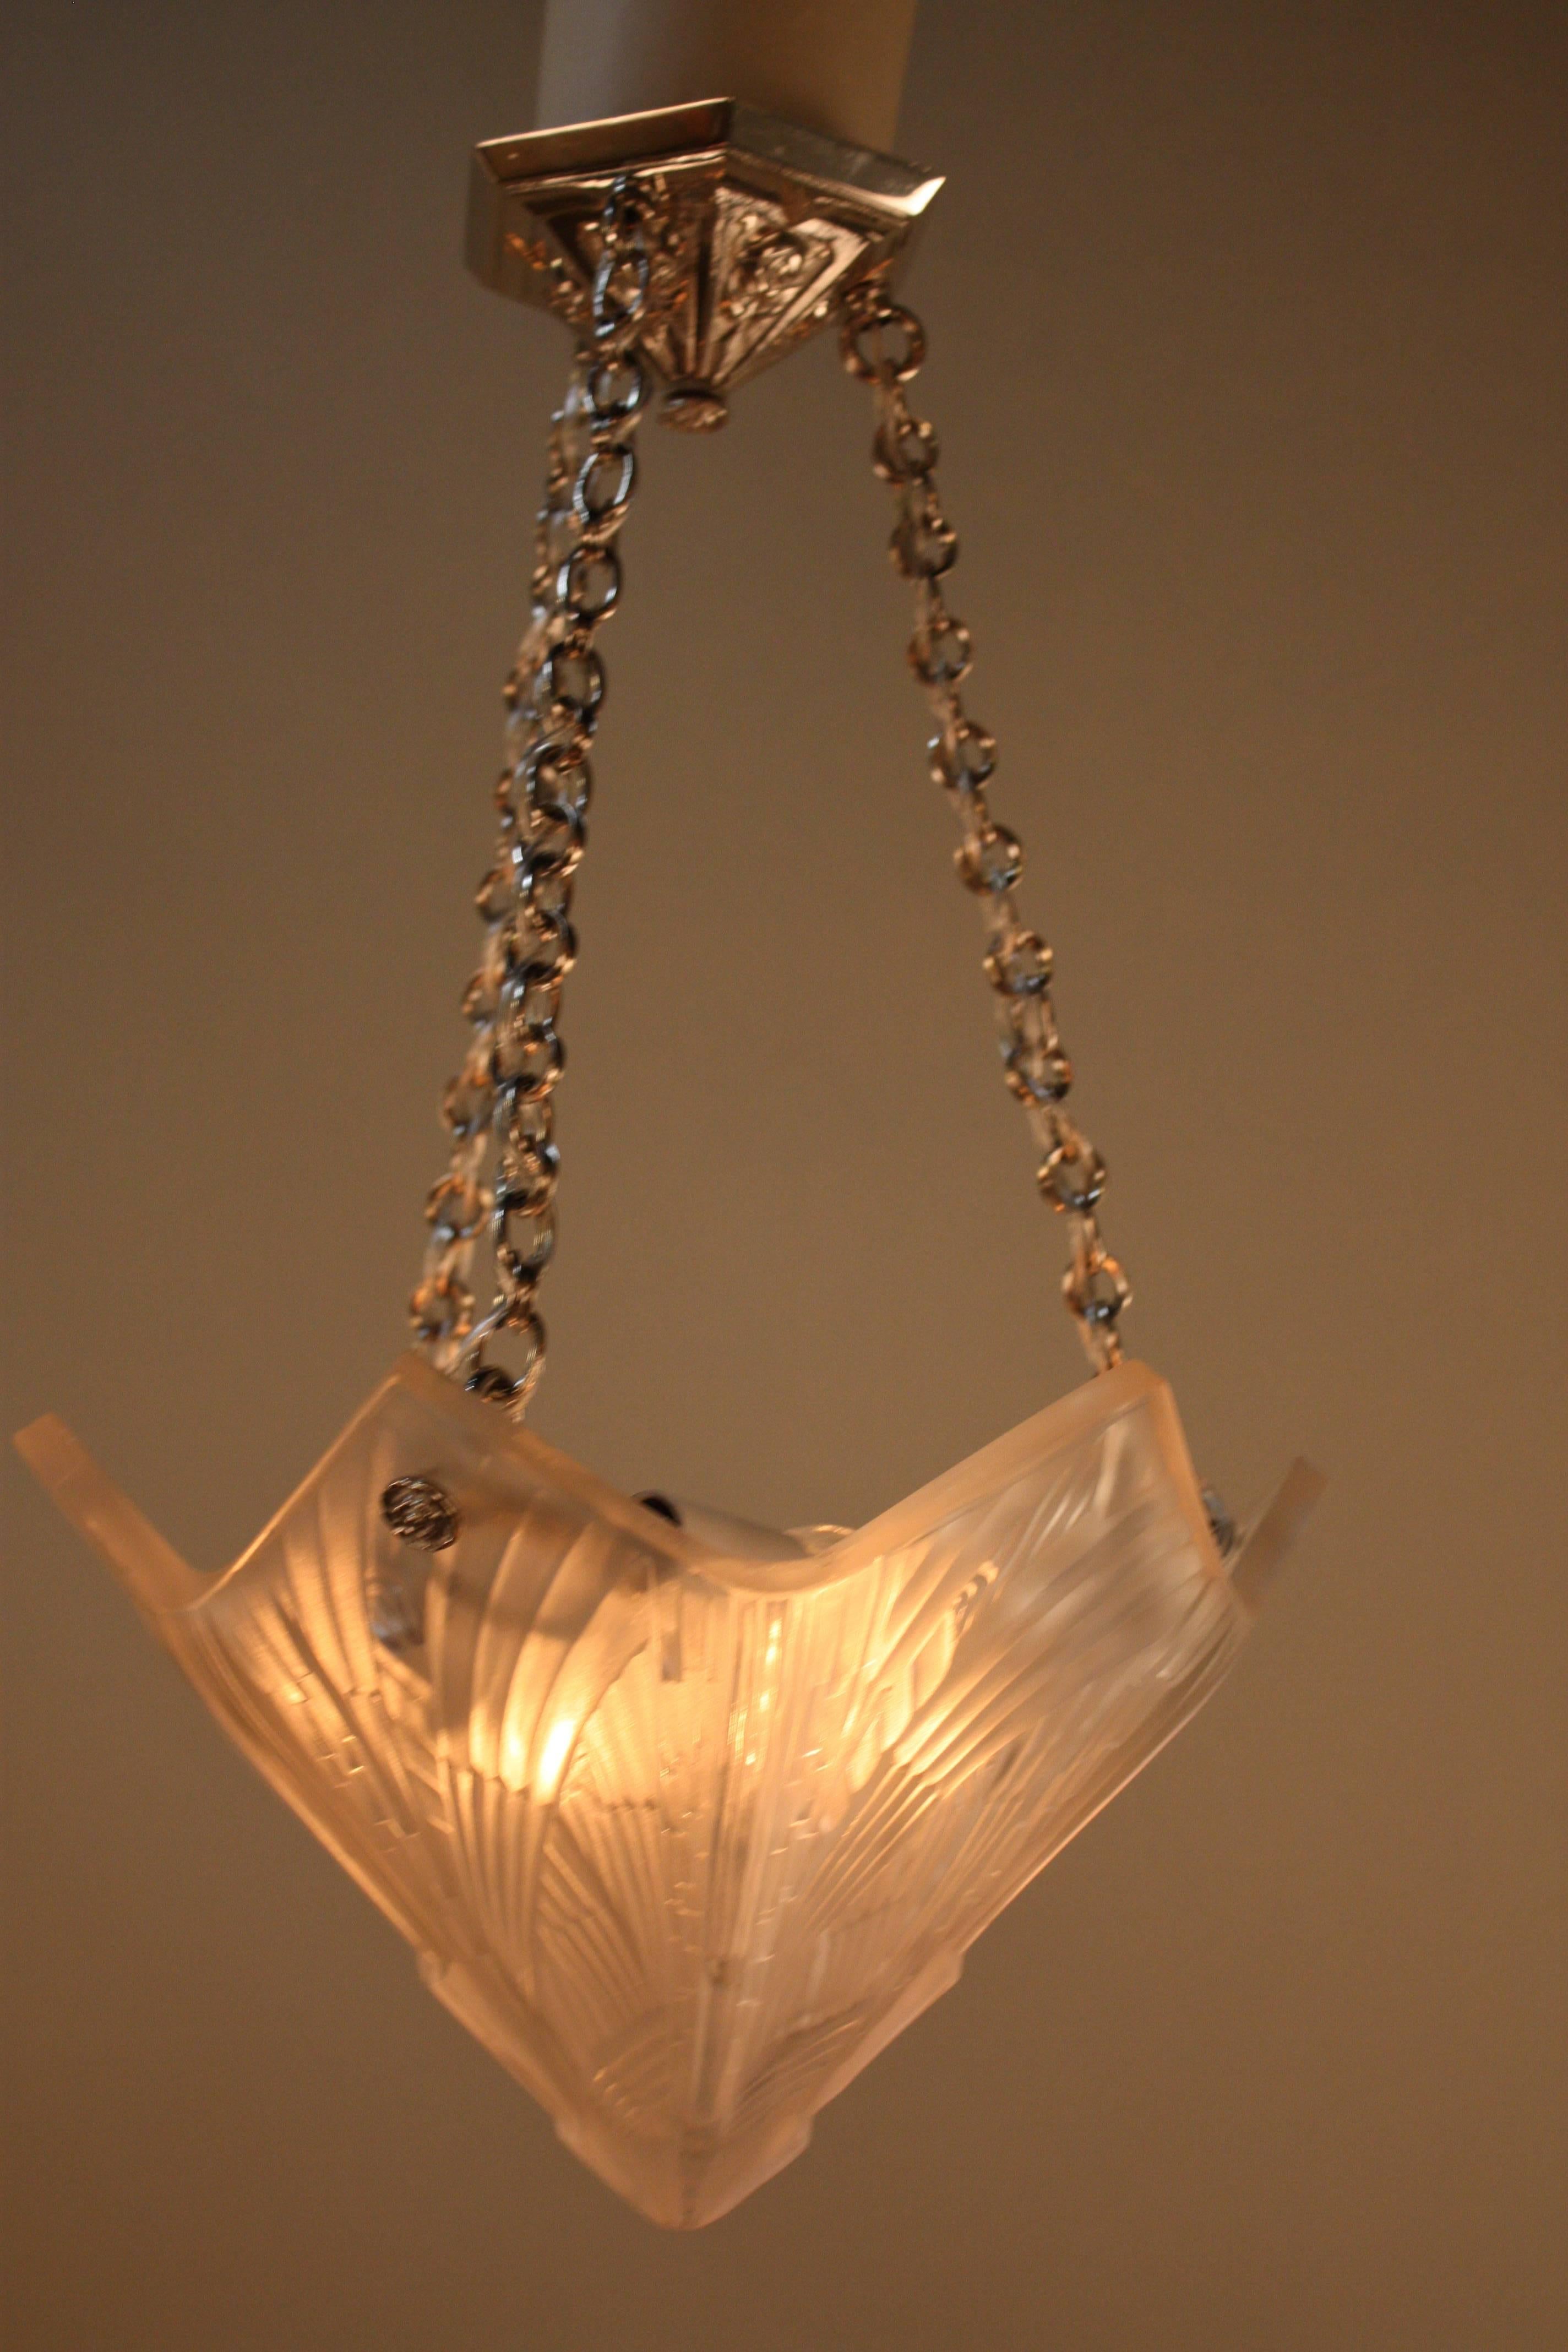 Beautiful Art Deco design glass with nickel on bronze hardware chandelier.
Six-light, 60 watt max each.